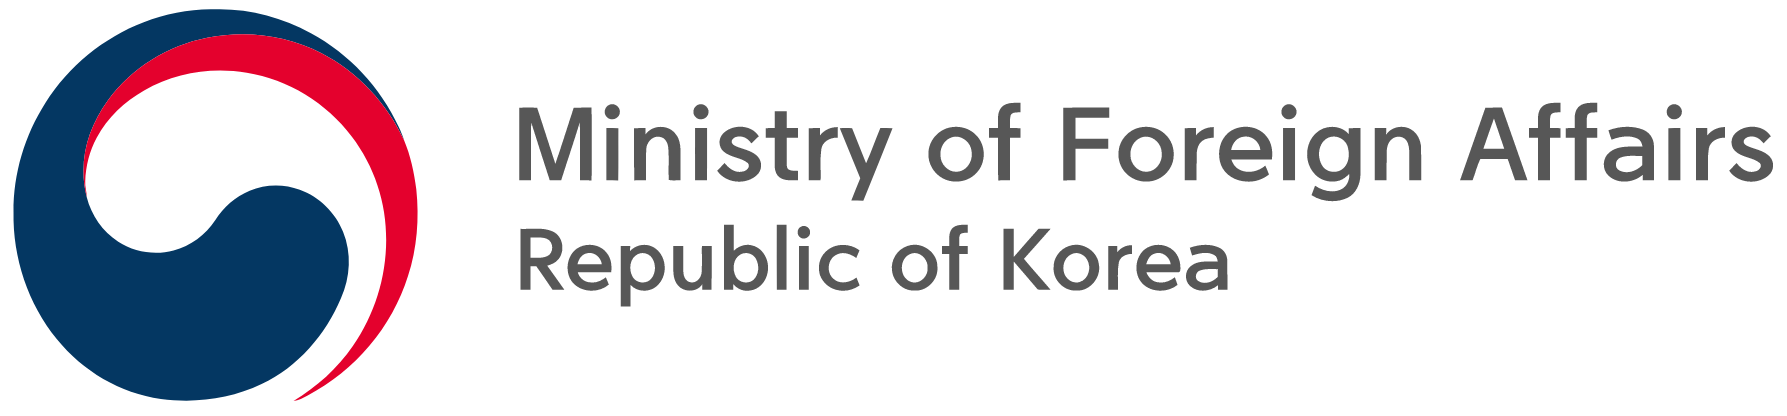 Republic of Korea Ministry of Foreign Affairs logo